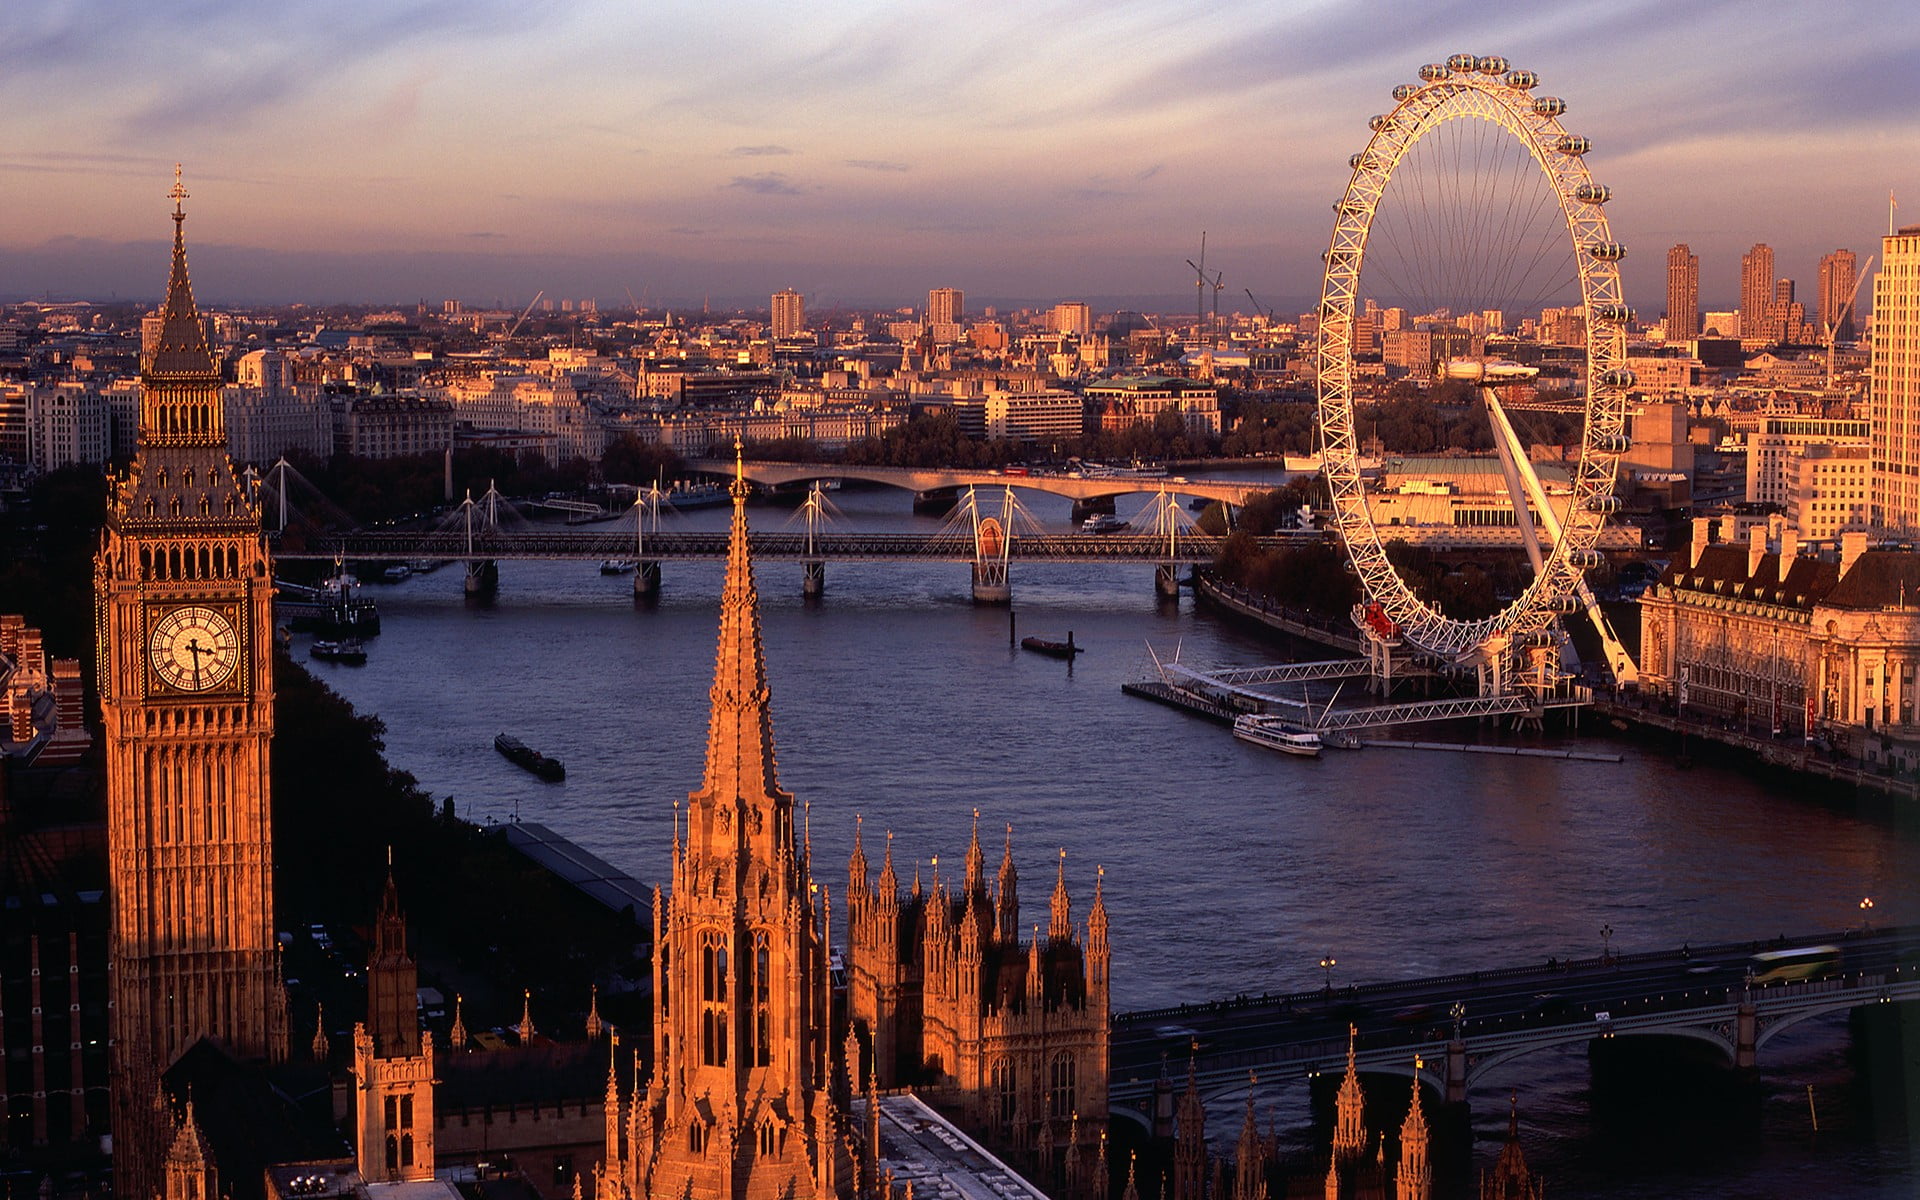 London skyline, city, London Eye, Big Ben, River Thames, ferris wheel